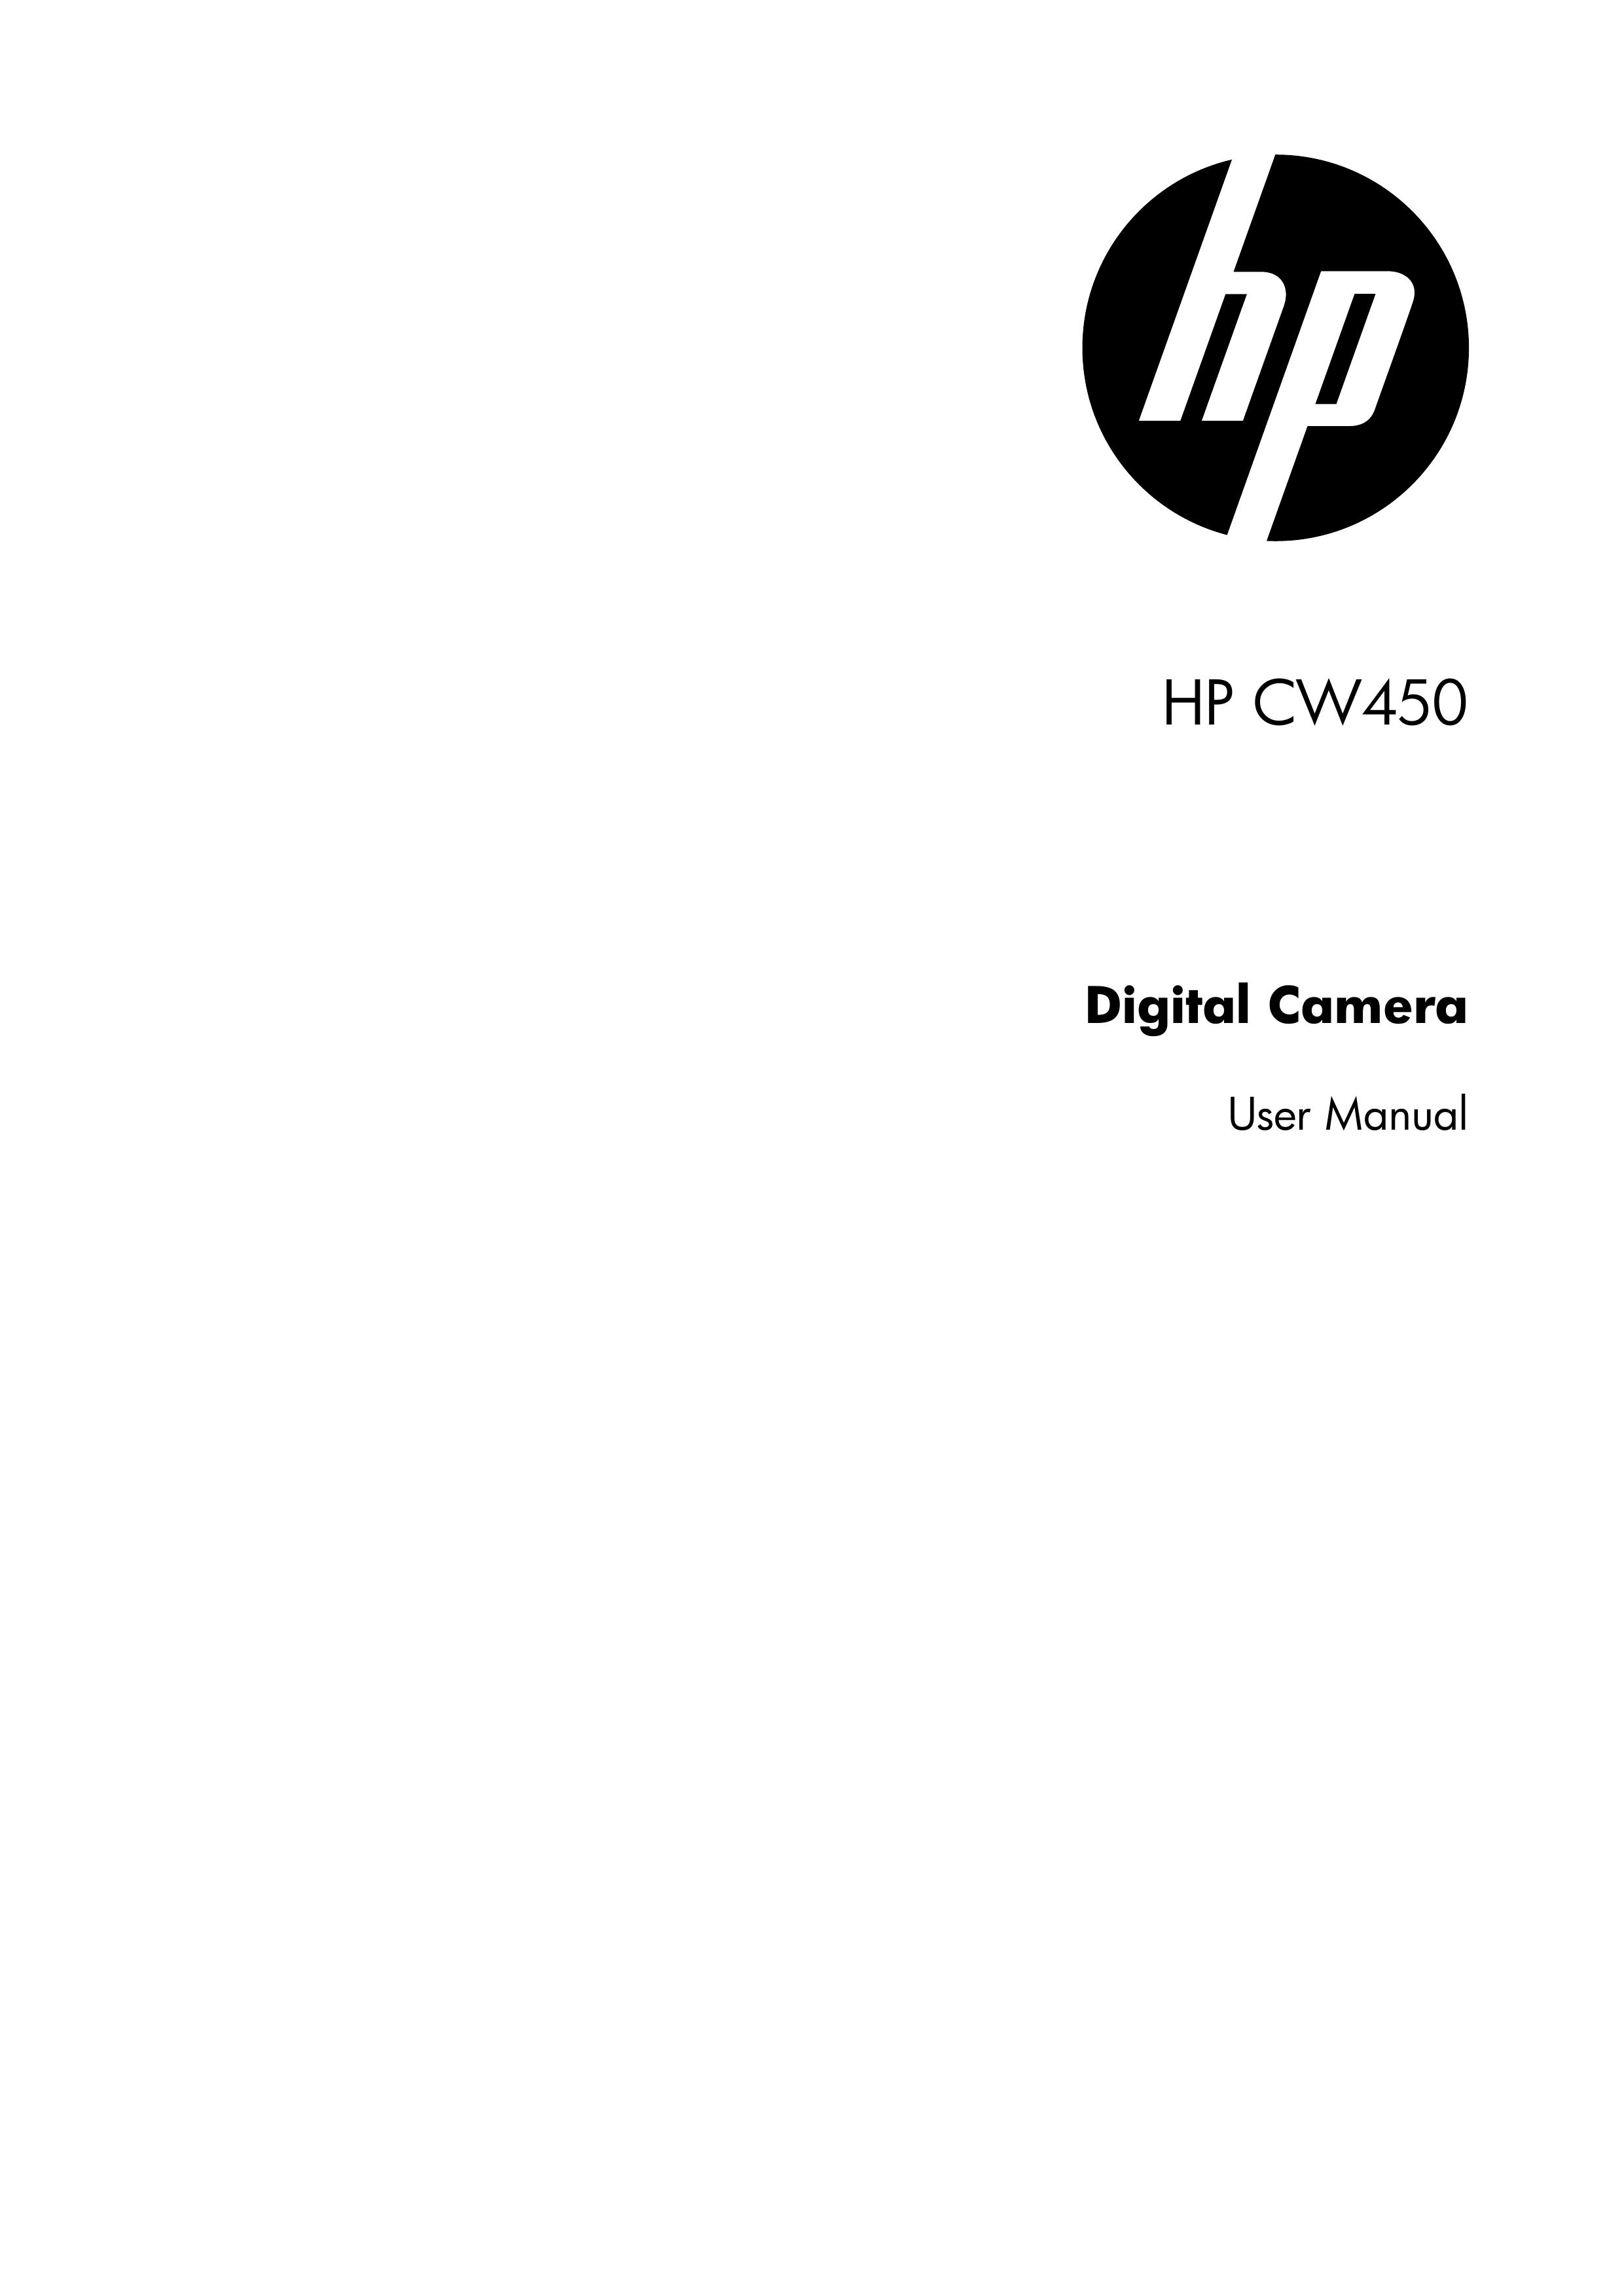 HP (Hewlett-Packard) CW450 Camcorder User Manual